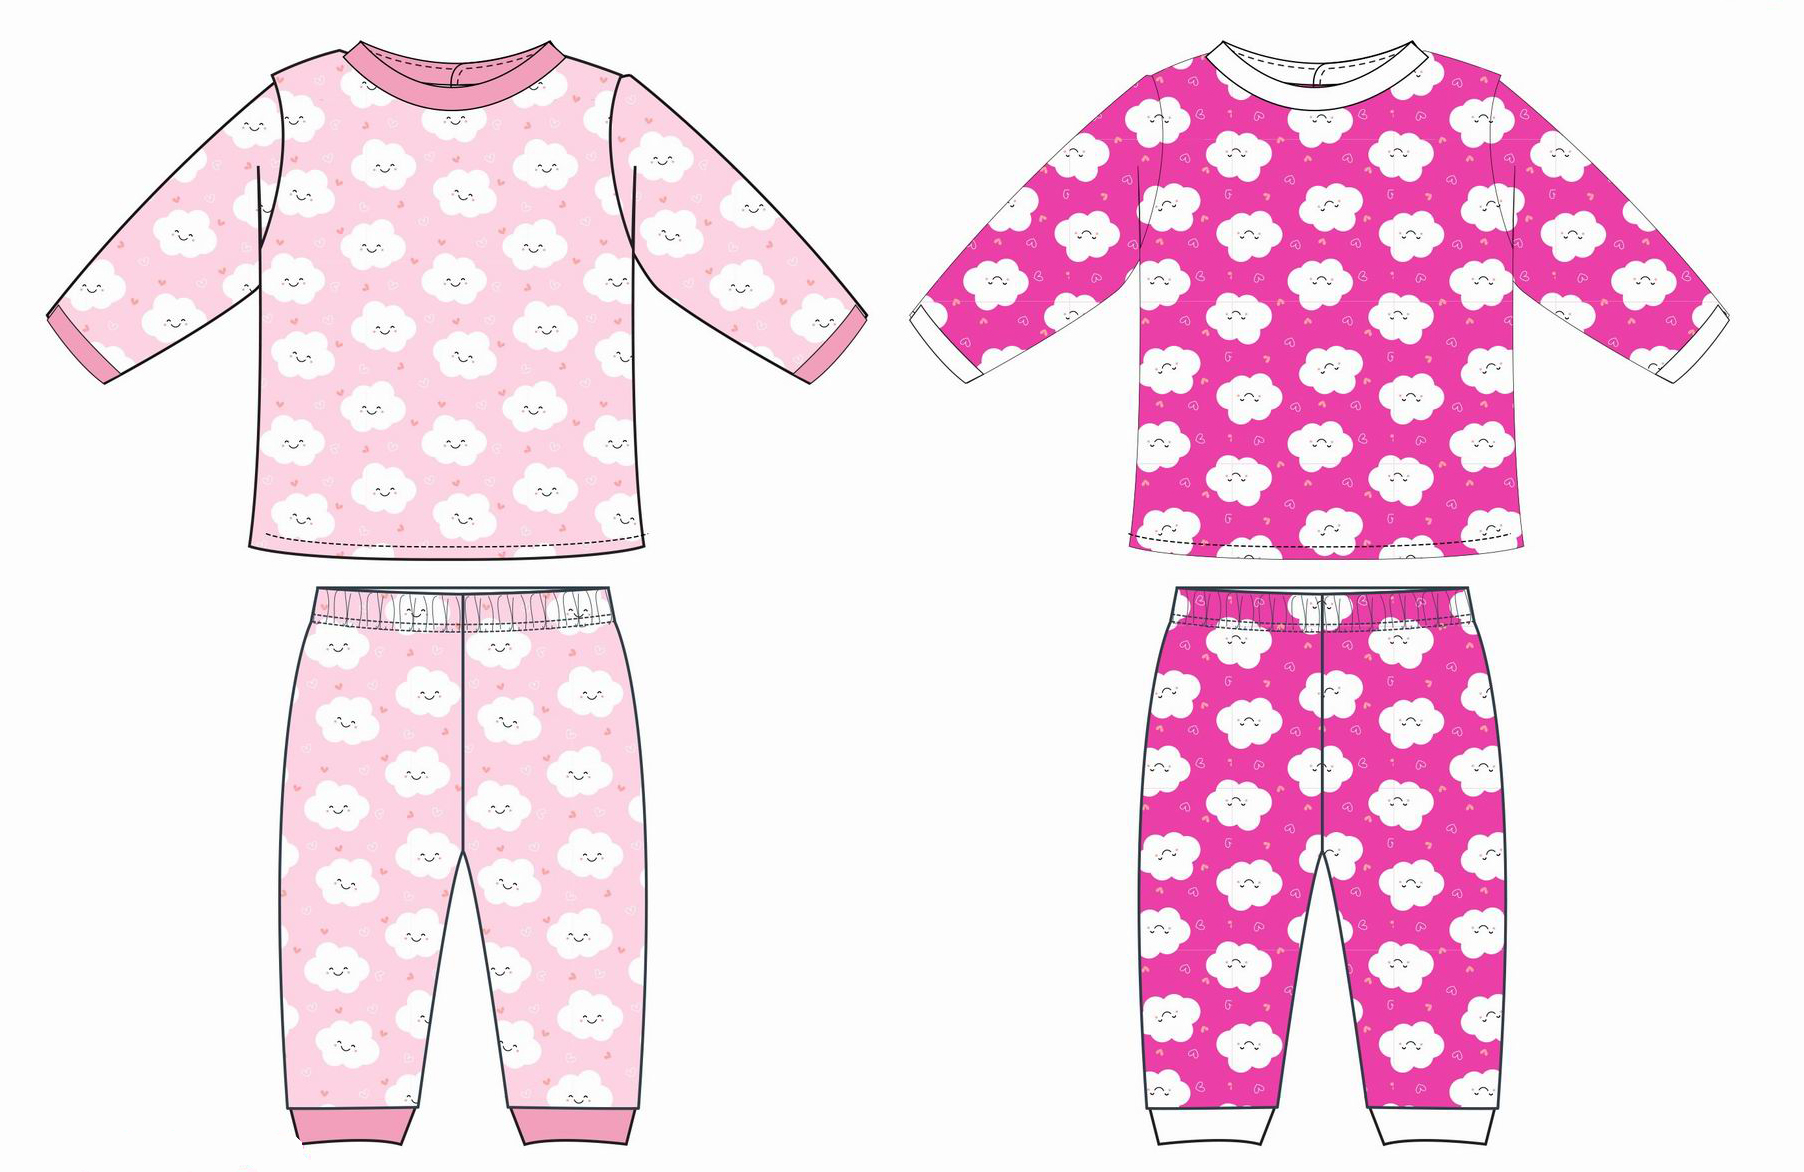 Baby Girl's 2 PC. Long-Sleeve Rib PAJAMAS Sets w/ Bedtime Cloud Print - Sizes 12M-24M